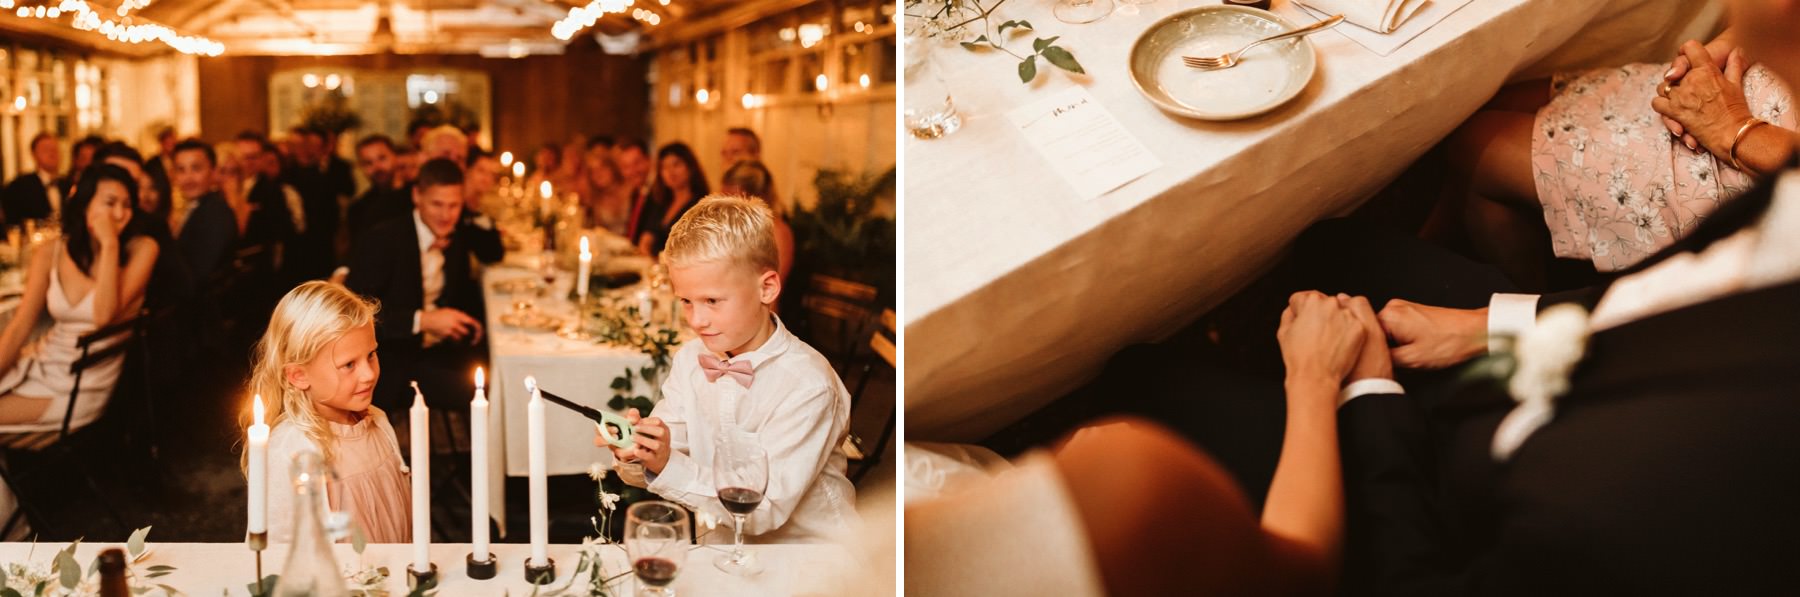 Swedish wedding traditions